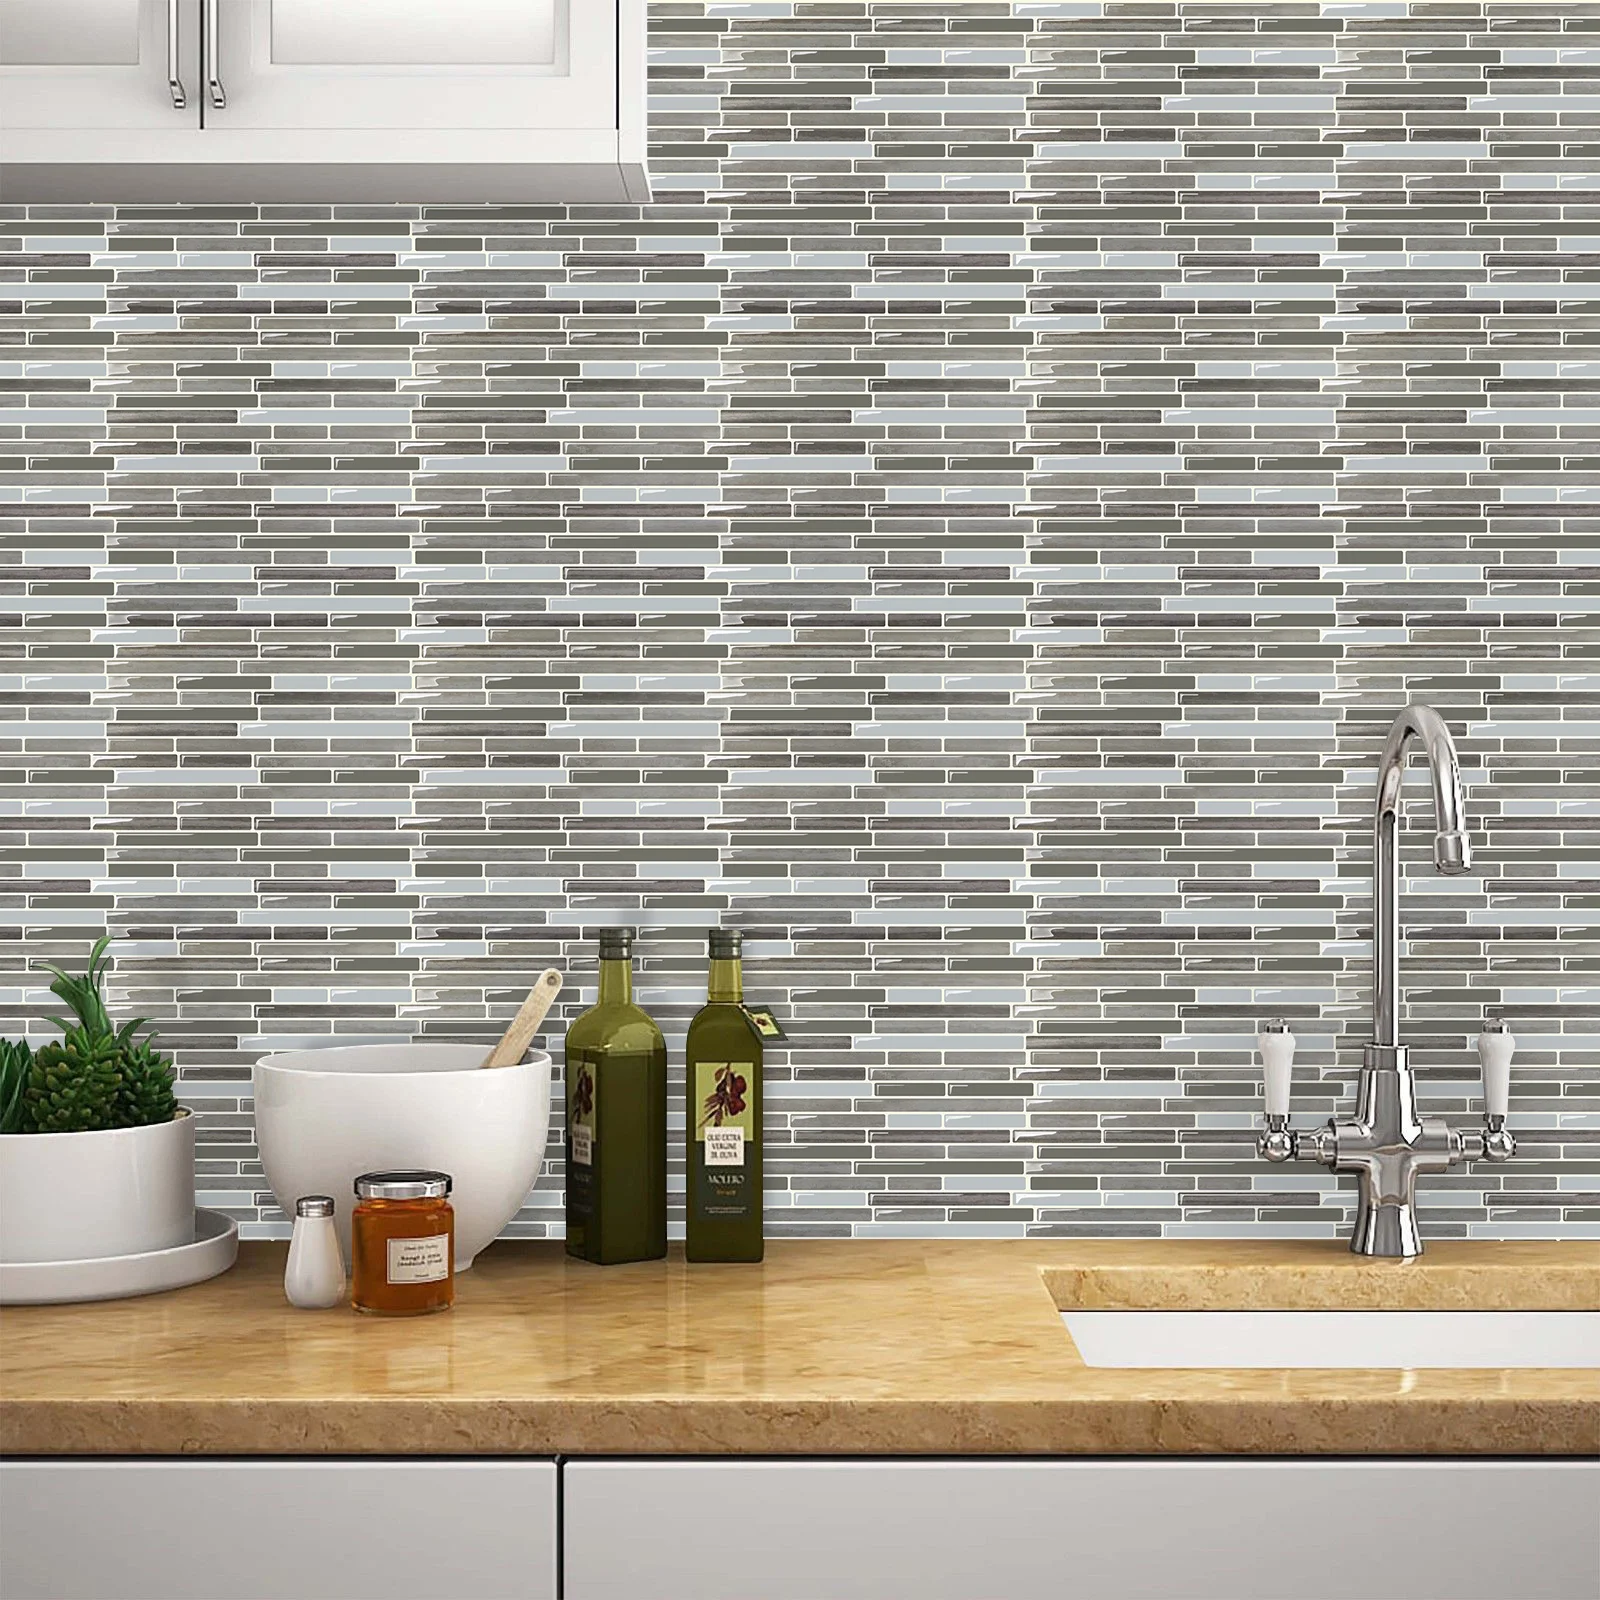 Backsplash Ideas And Kitchen Backsplash Peel And Stick Vinyl Mosaic Subway Decorative Wall Tile For Home Decor Buy Digital Kitchen Wall Tile